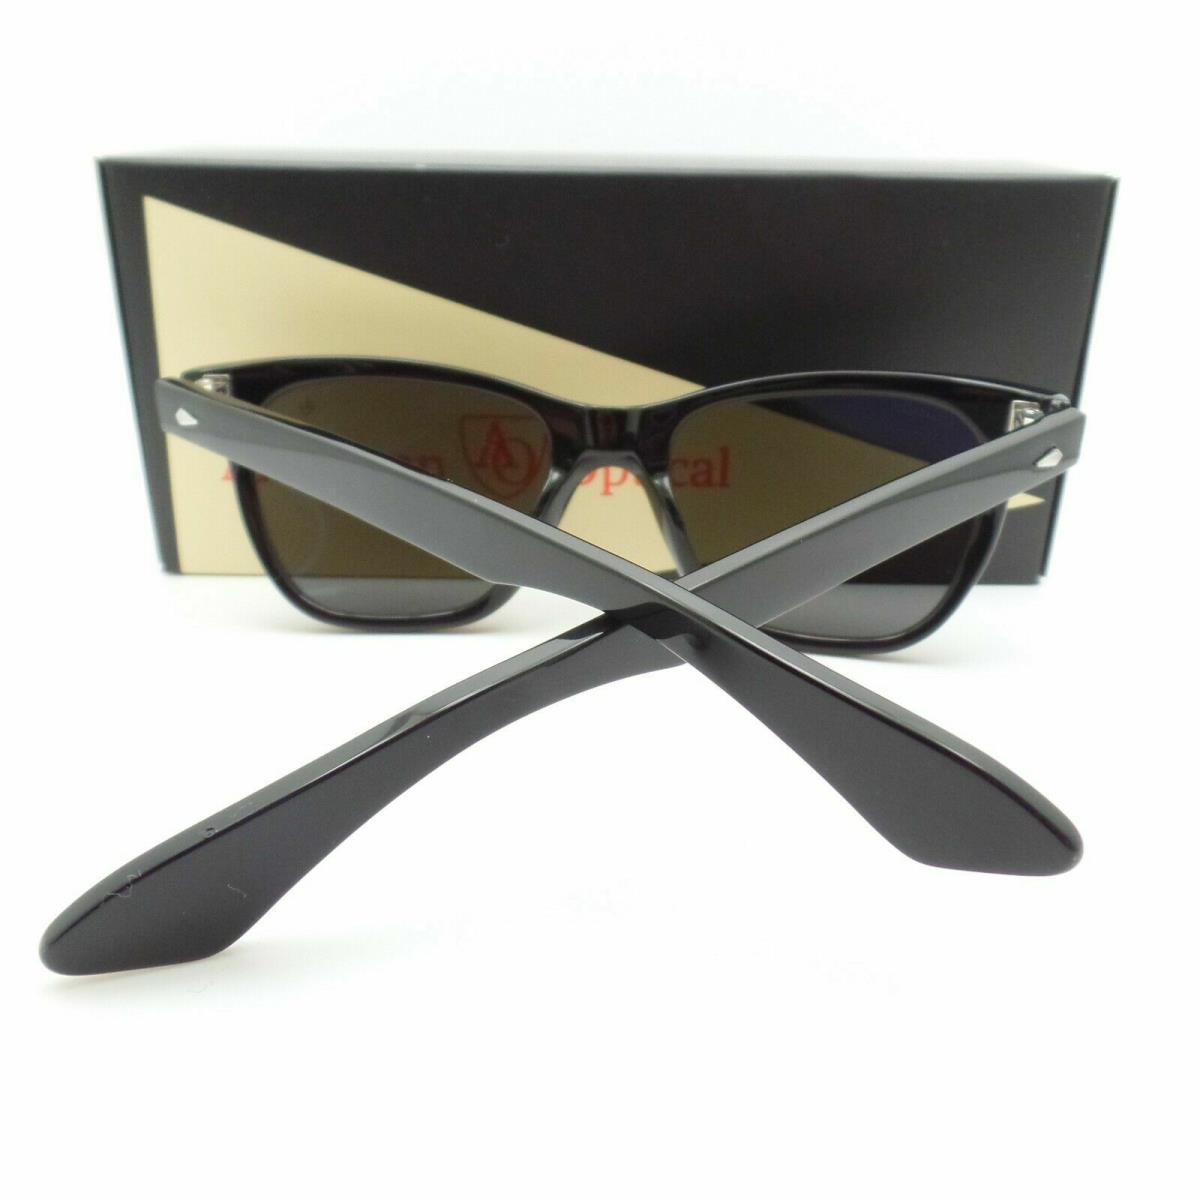 AO American Optical Saratoga Sunglasses Black 3 Grey Polar or Frame Only 54/19/145 Tinted